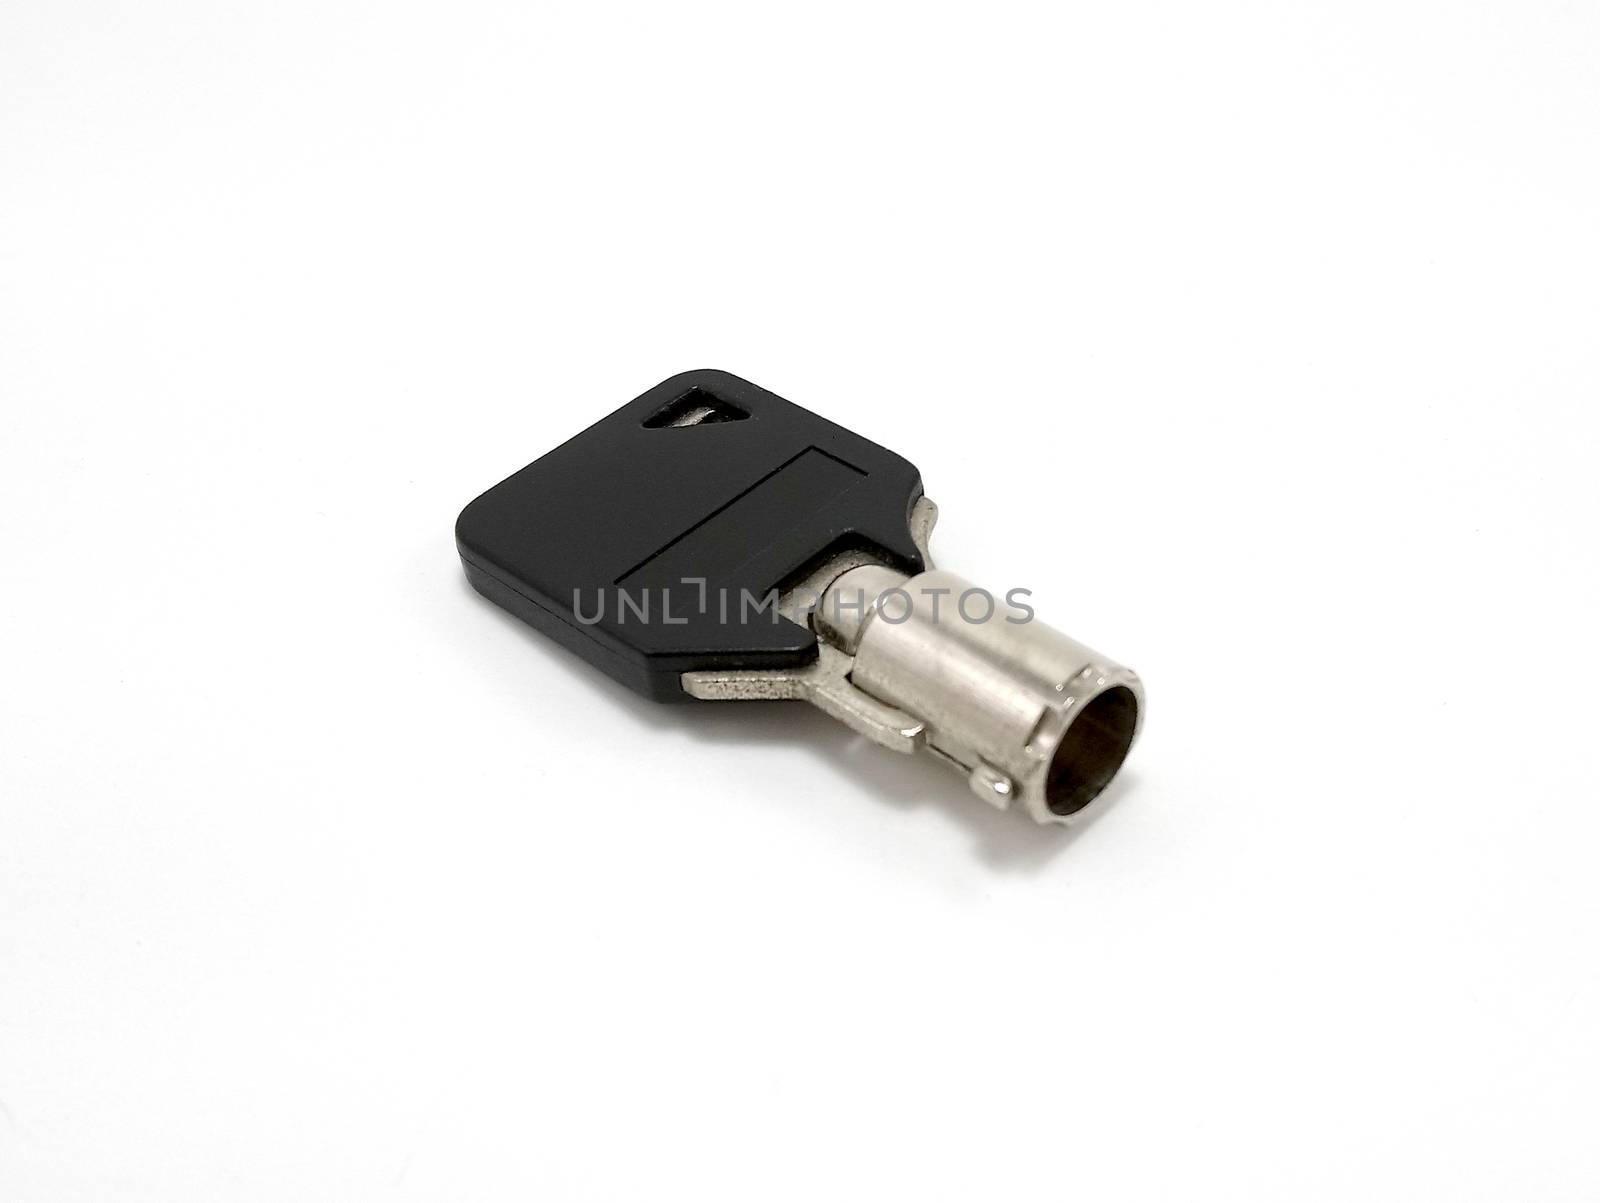 small black tubular key by imwaltersy